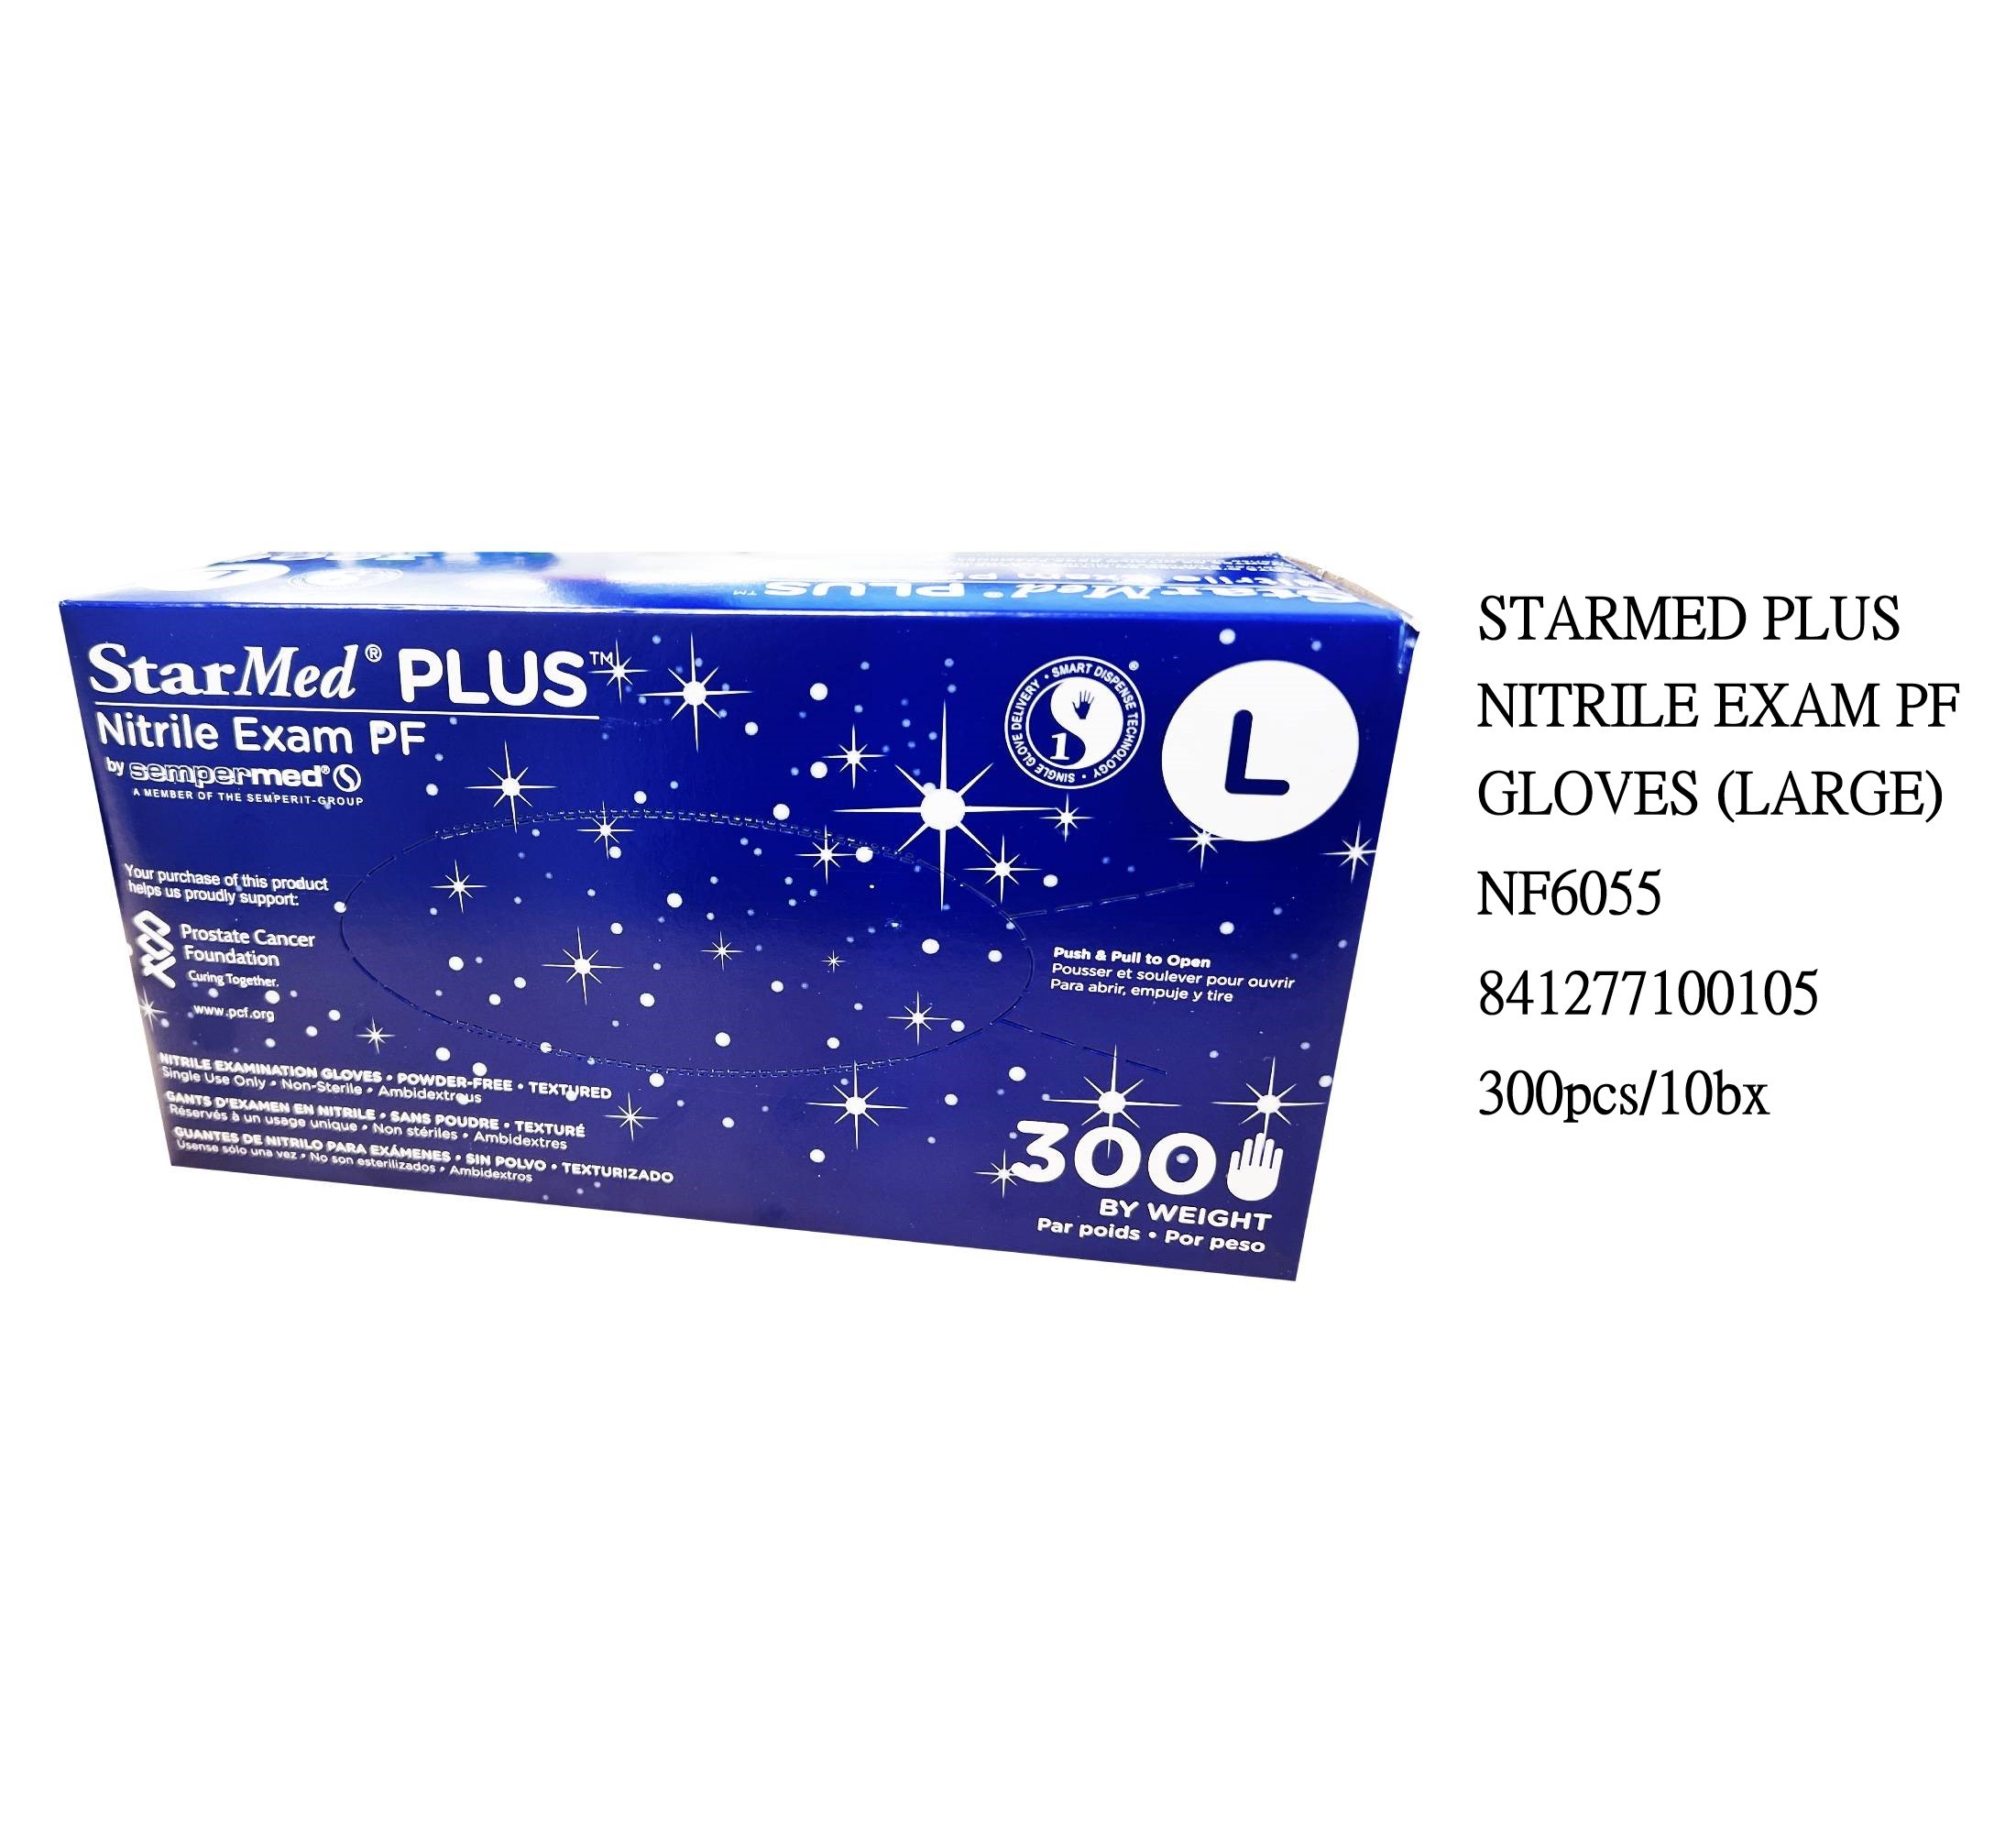 STARMED PLUS NITRILE EXAM PF GLOVES (LARGE) NF6055